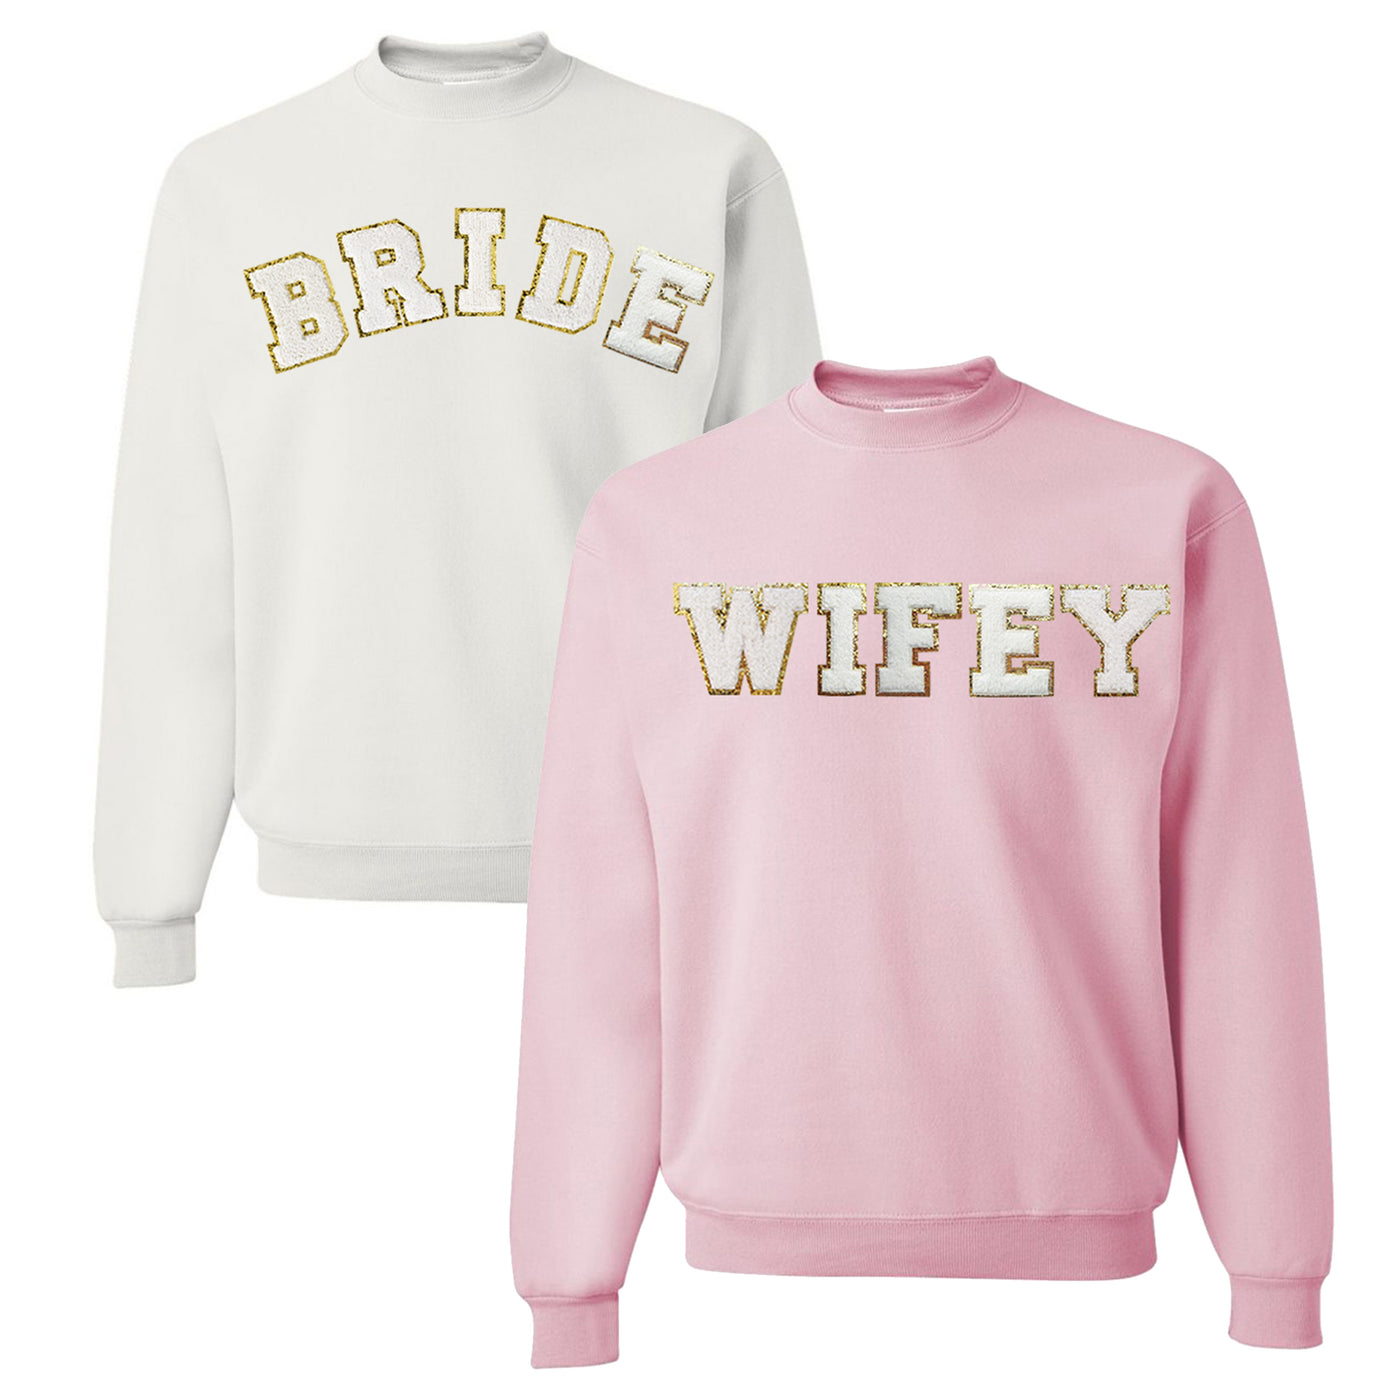 Wifey/Bride Letter Patch Crewneck Sweatshirt